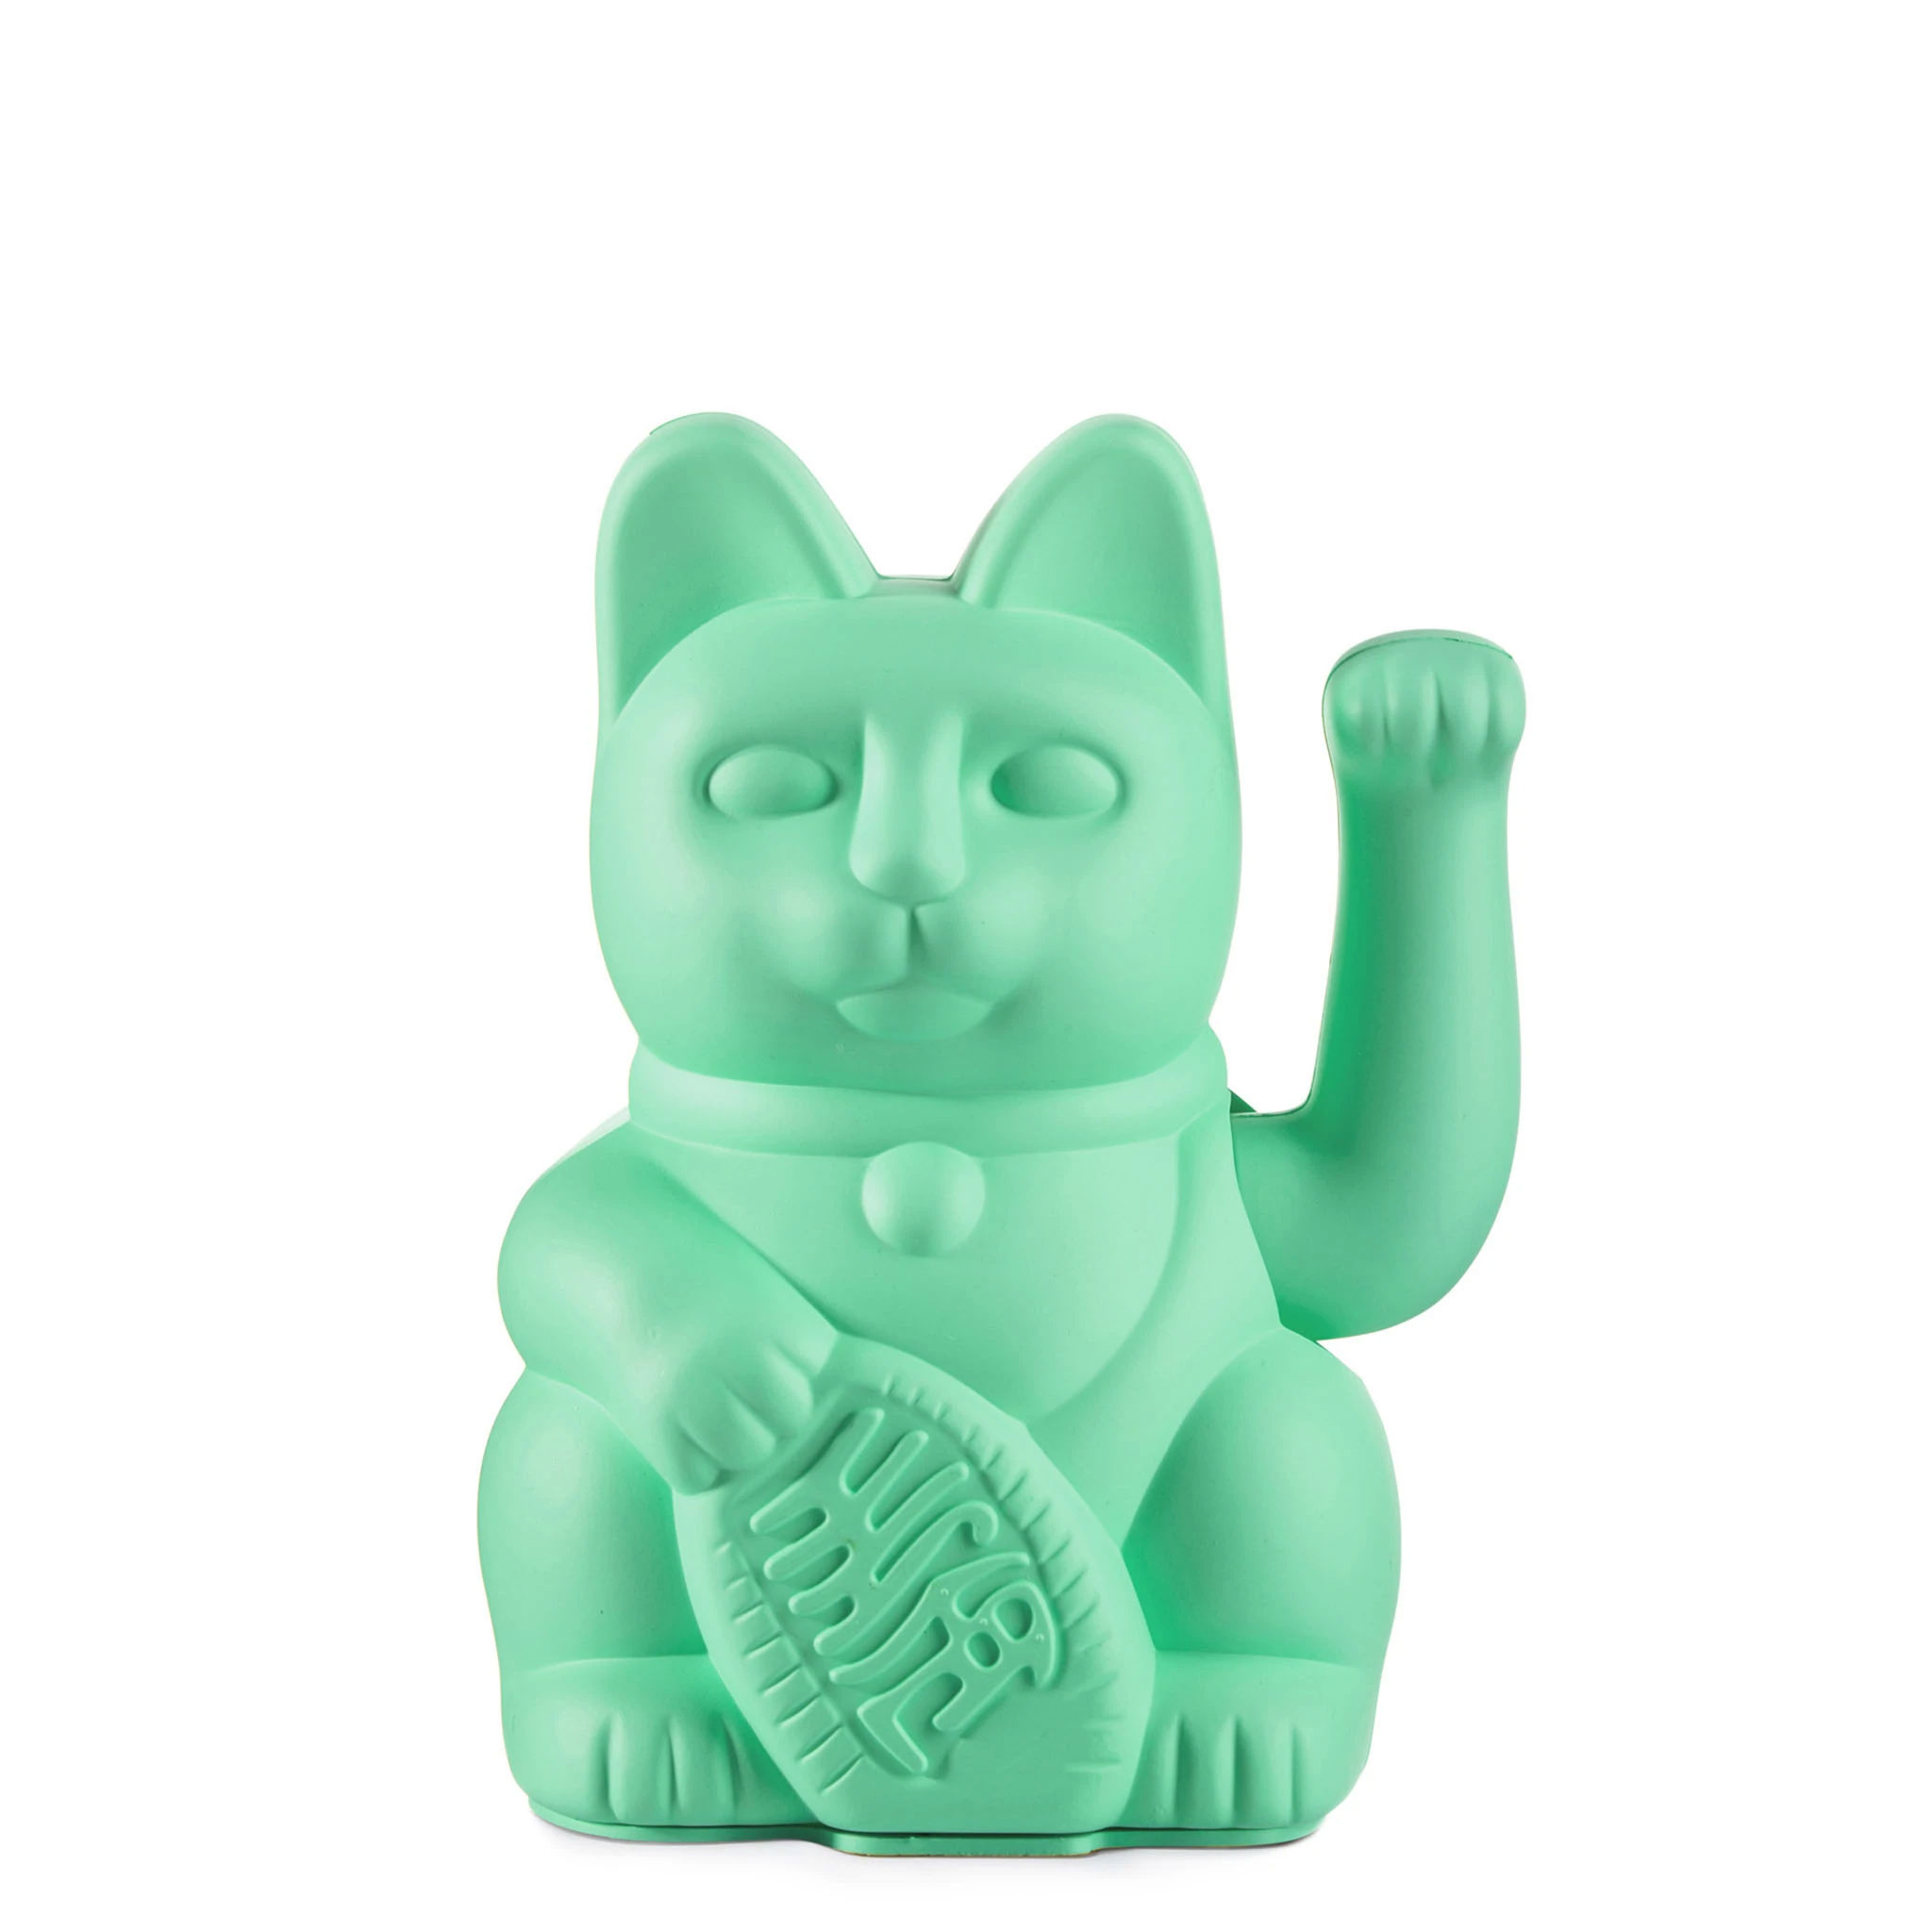 WINKEKATZE Lucky Cat / mint green / Glückskatze von donkey products, Katze 